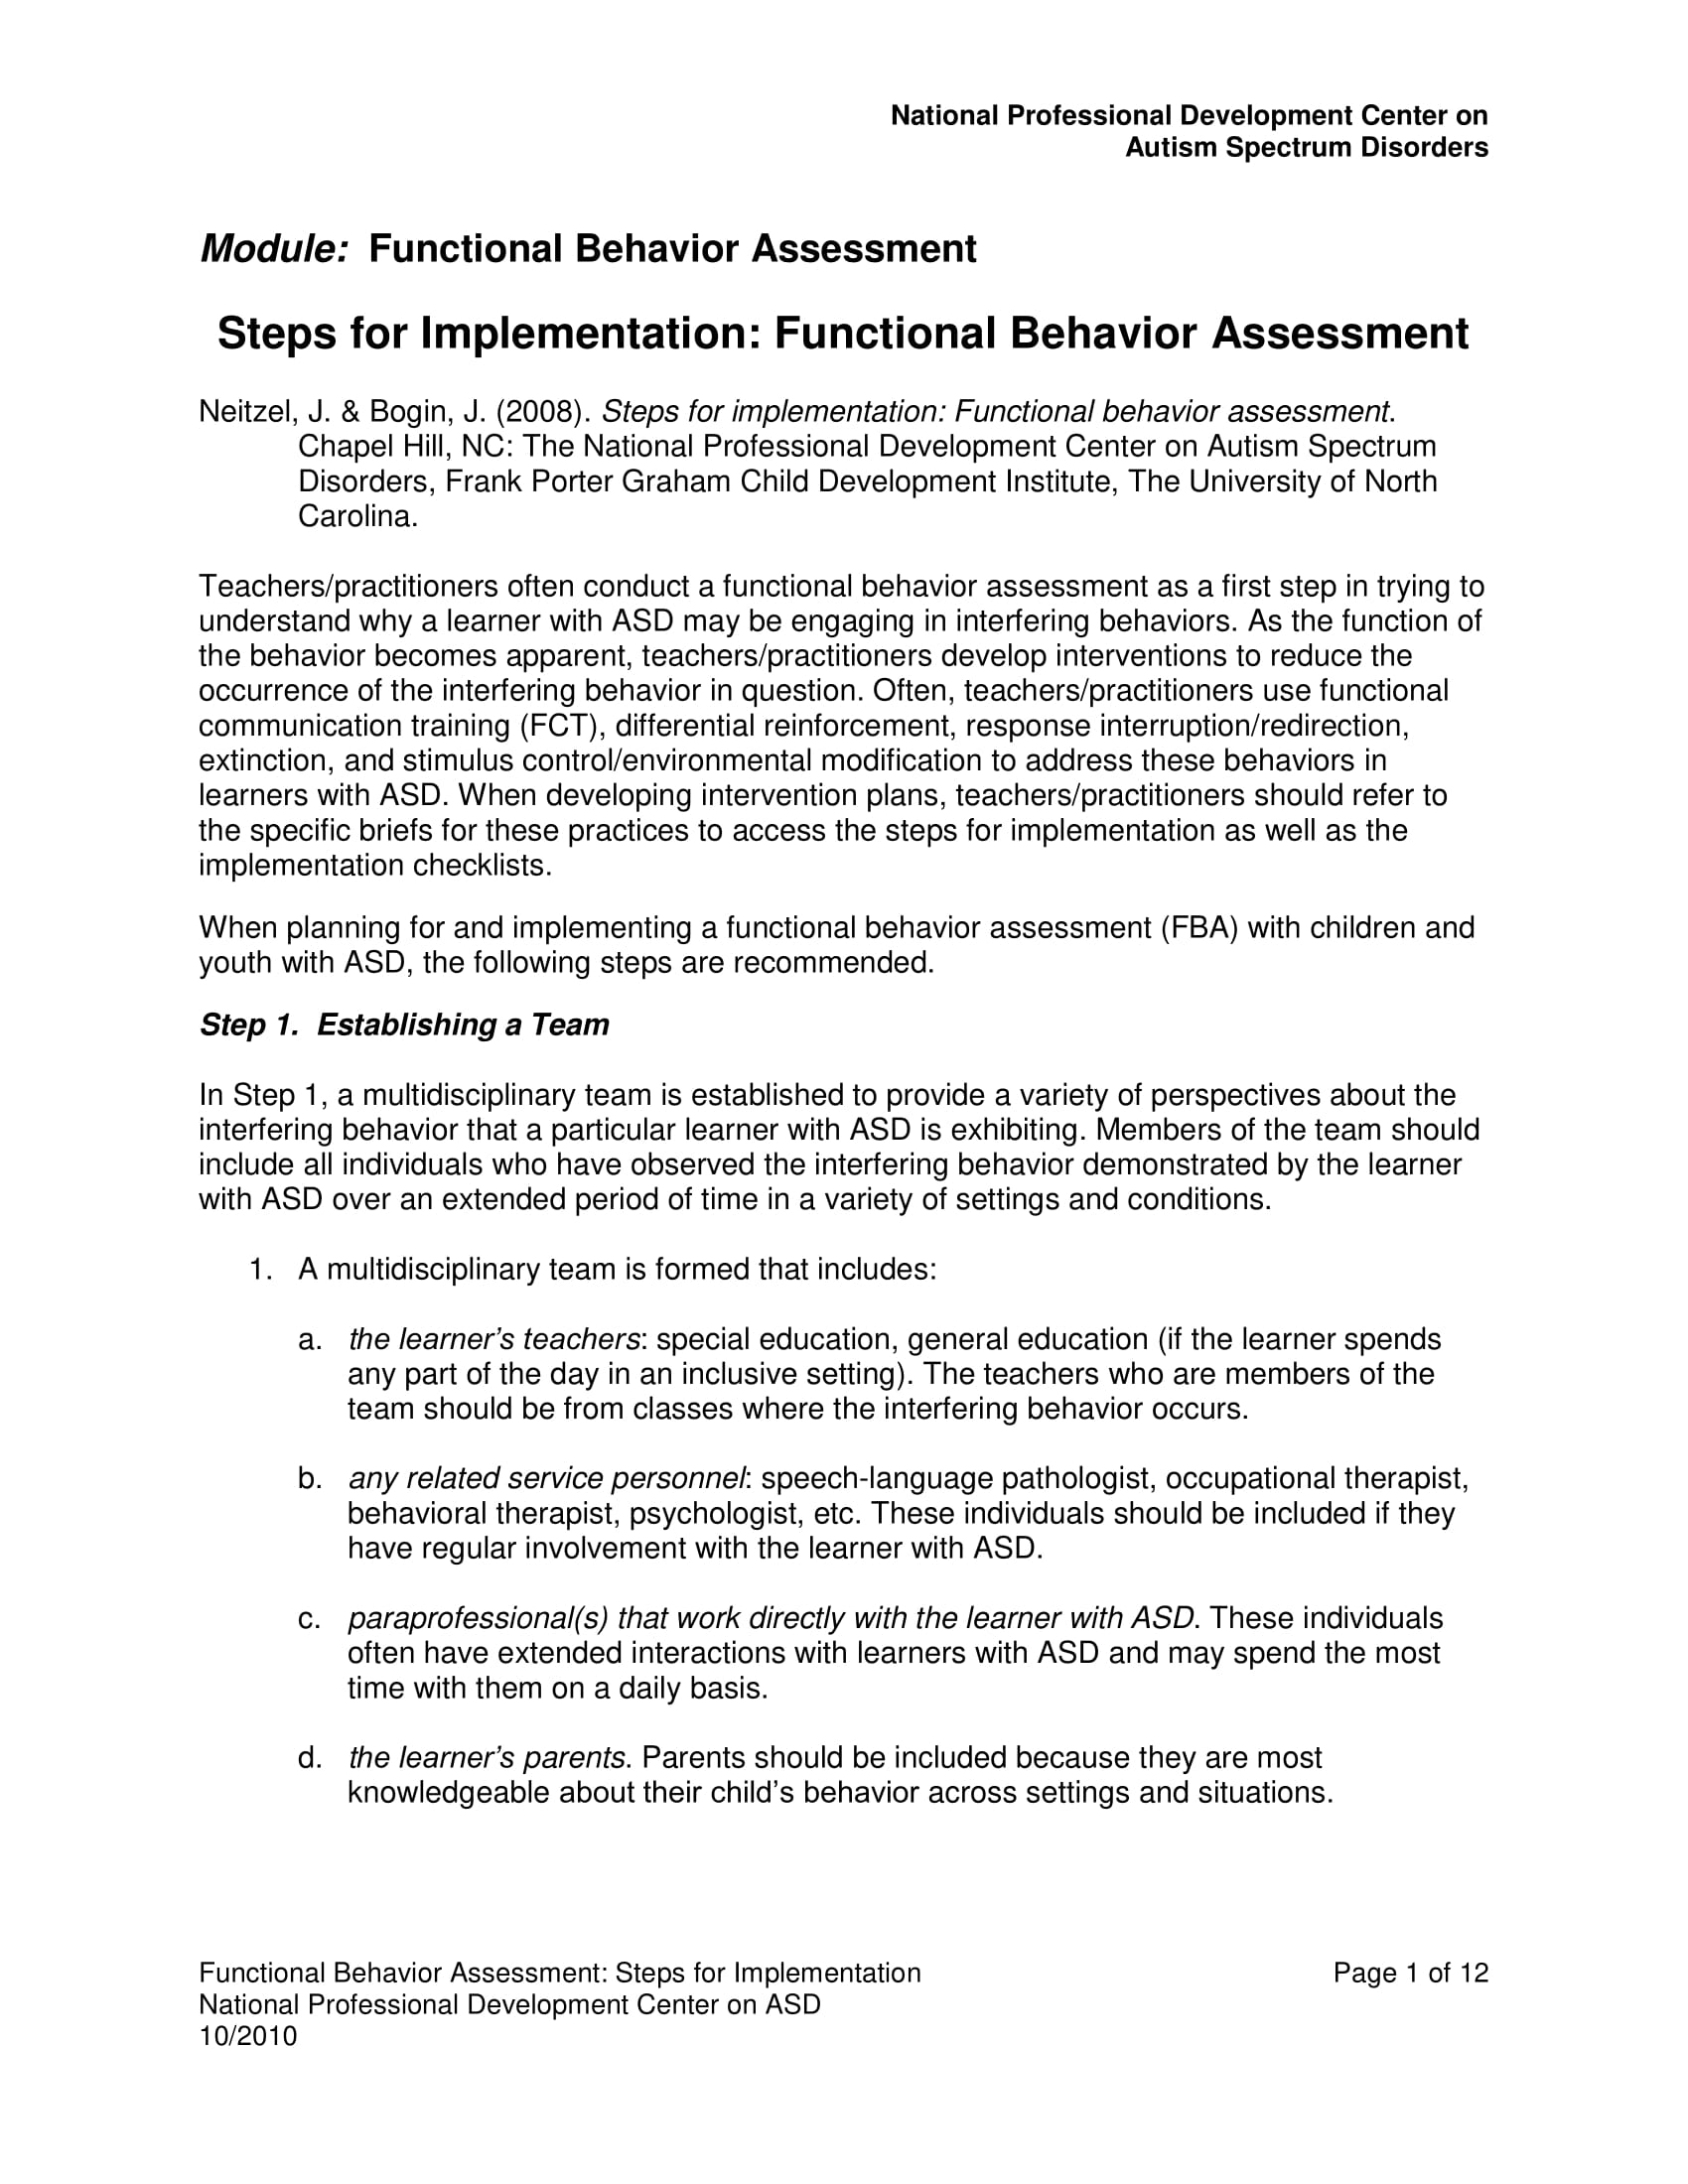 steps for analysis implementation of functional behavior assessment example 01